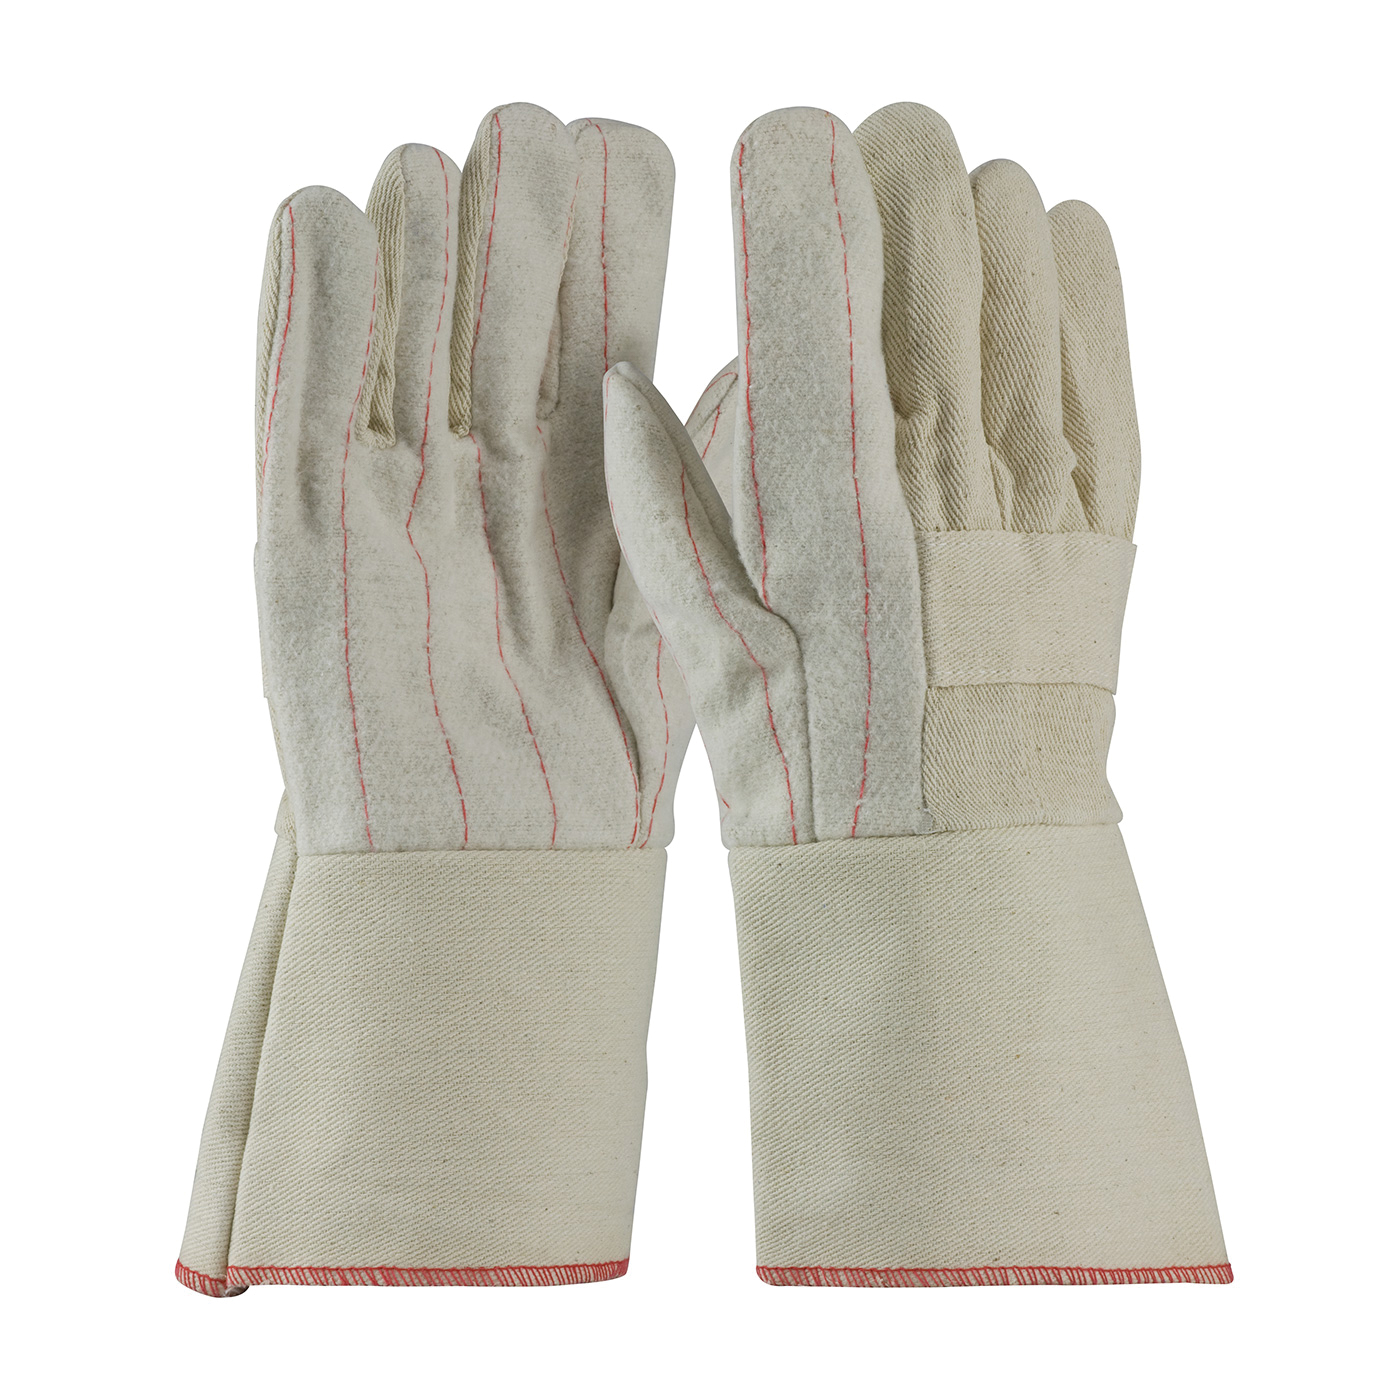 PIP® 94-924G Men's Premium Grade Hot Mill Gloves, Universal, Cotton/Canvas, Natural, Cotton, Gauntlet Cuff, 12.4 in L